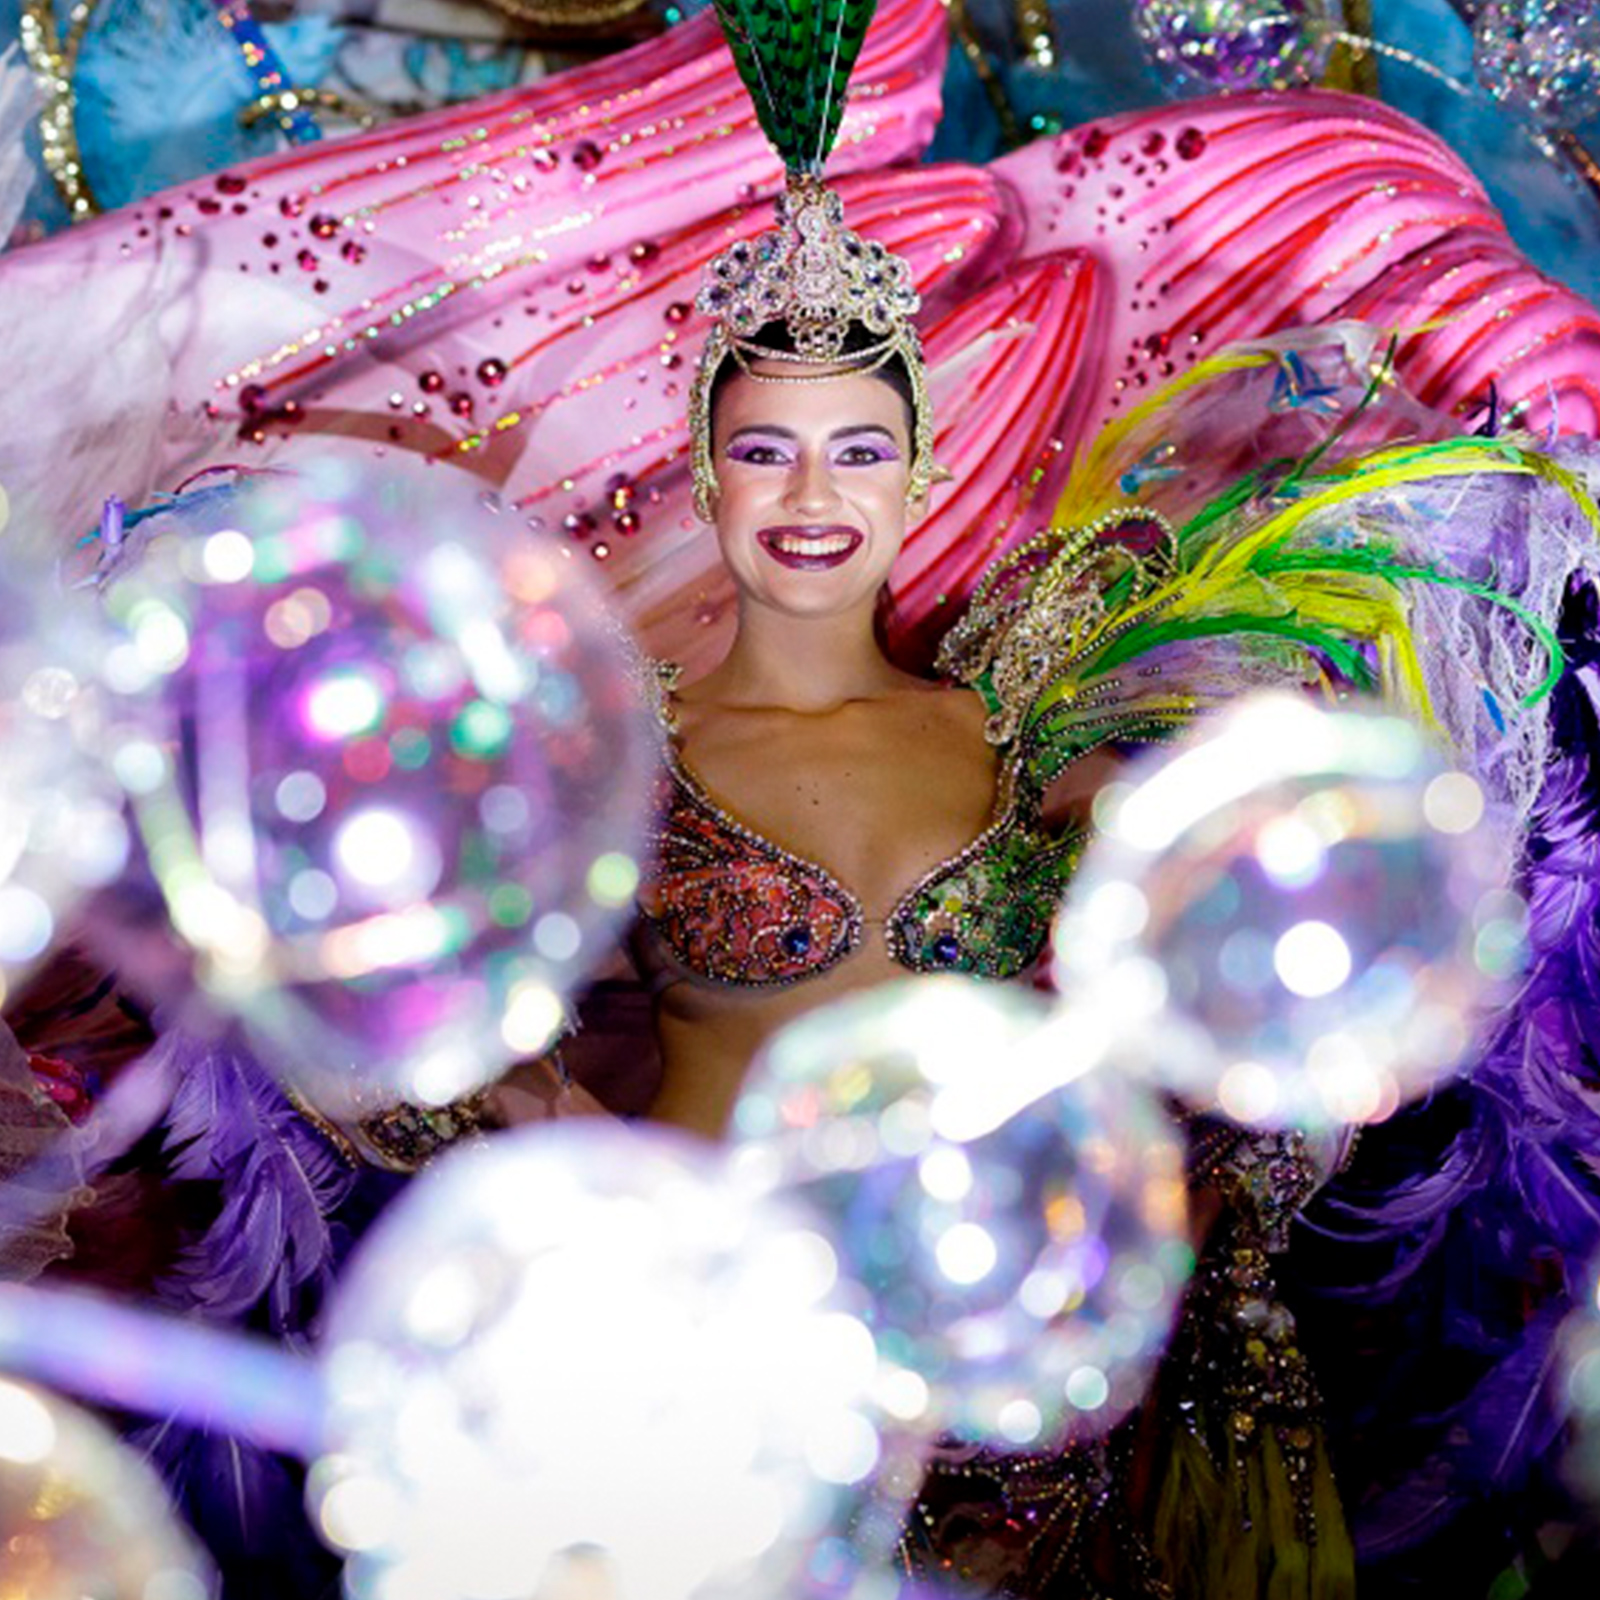 La murga infantil Lenguas Largas abre los concursos del Carnaval de S/C de Tenerife 2023